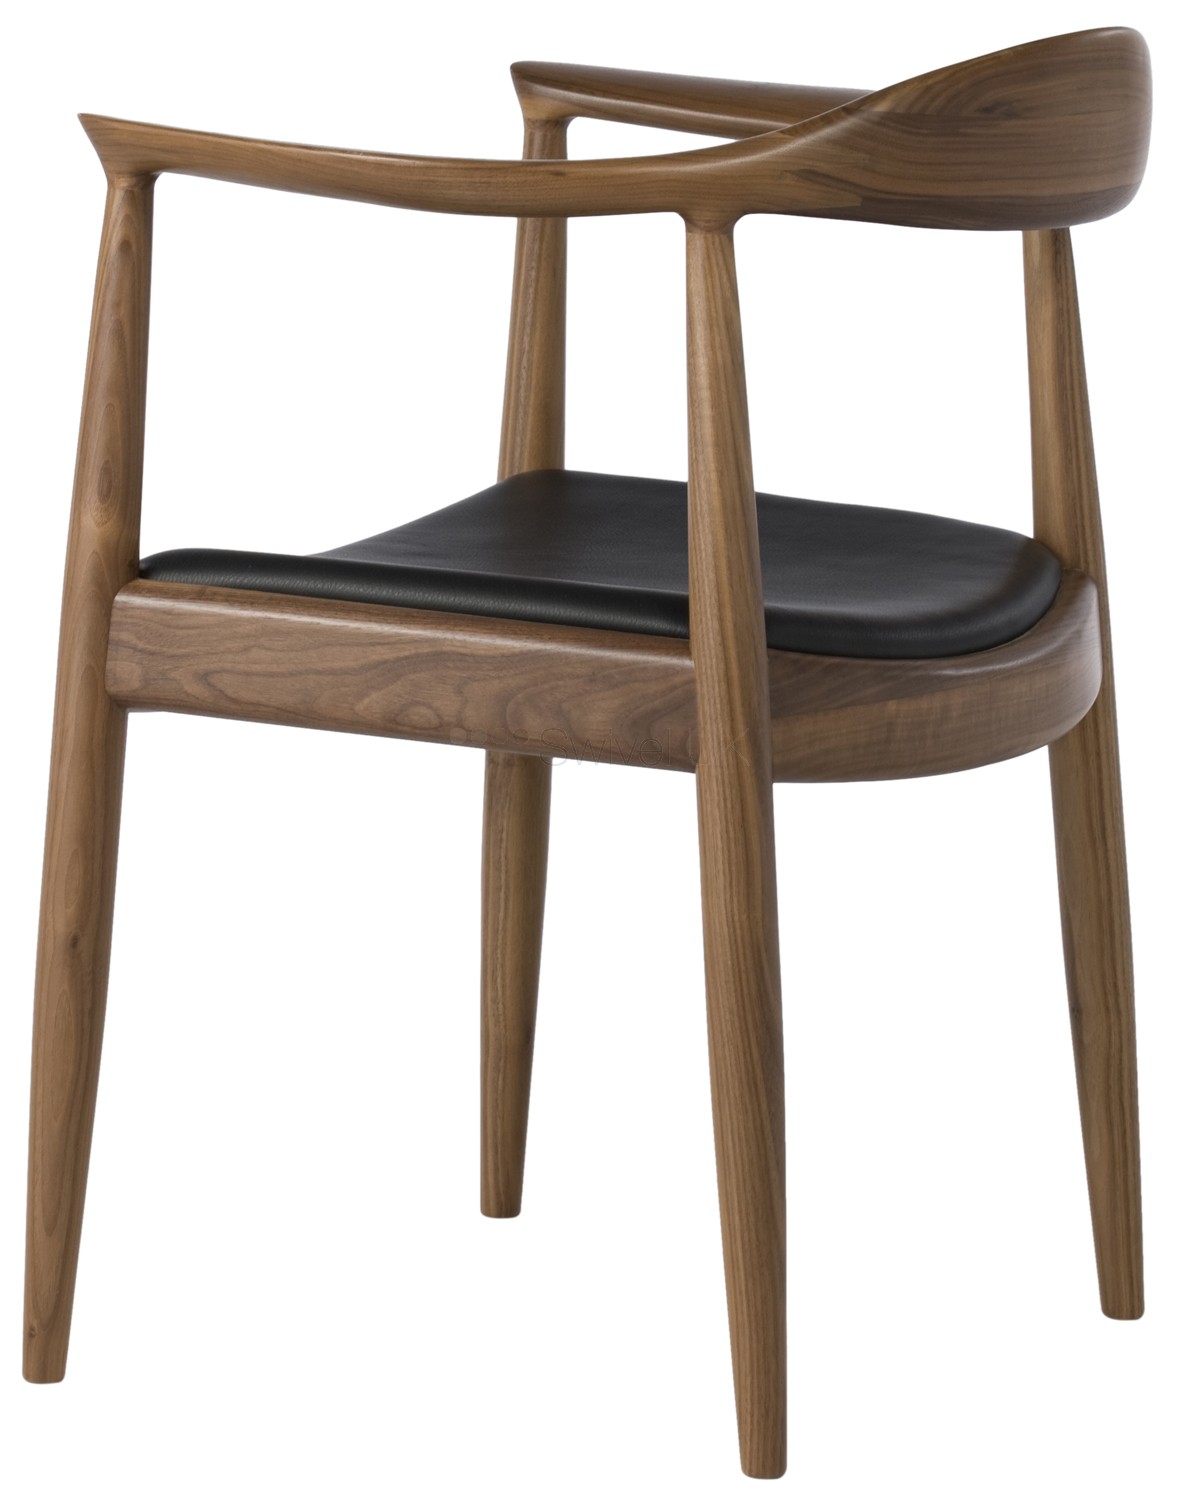 Designer Hans Wegner Kennedy Chair replica   